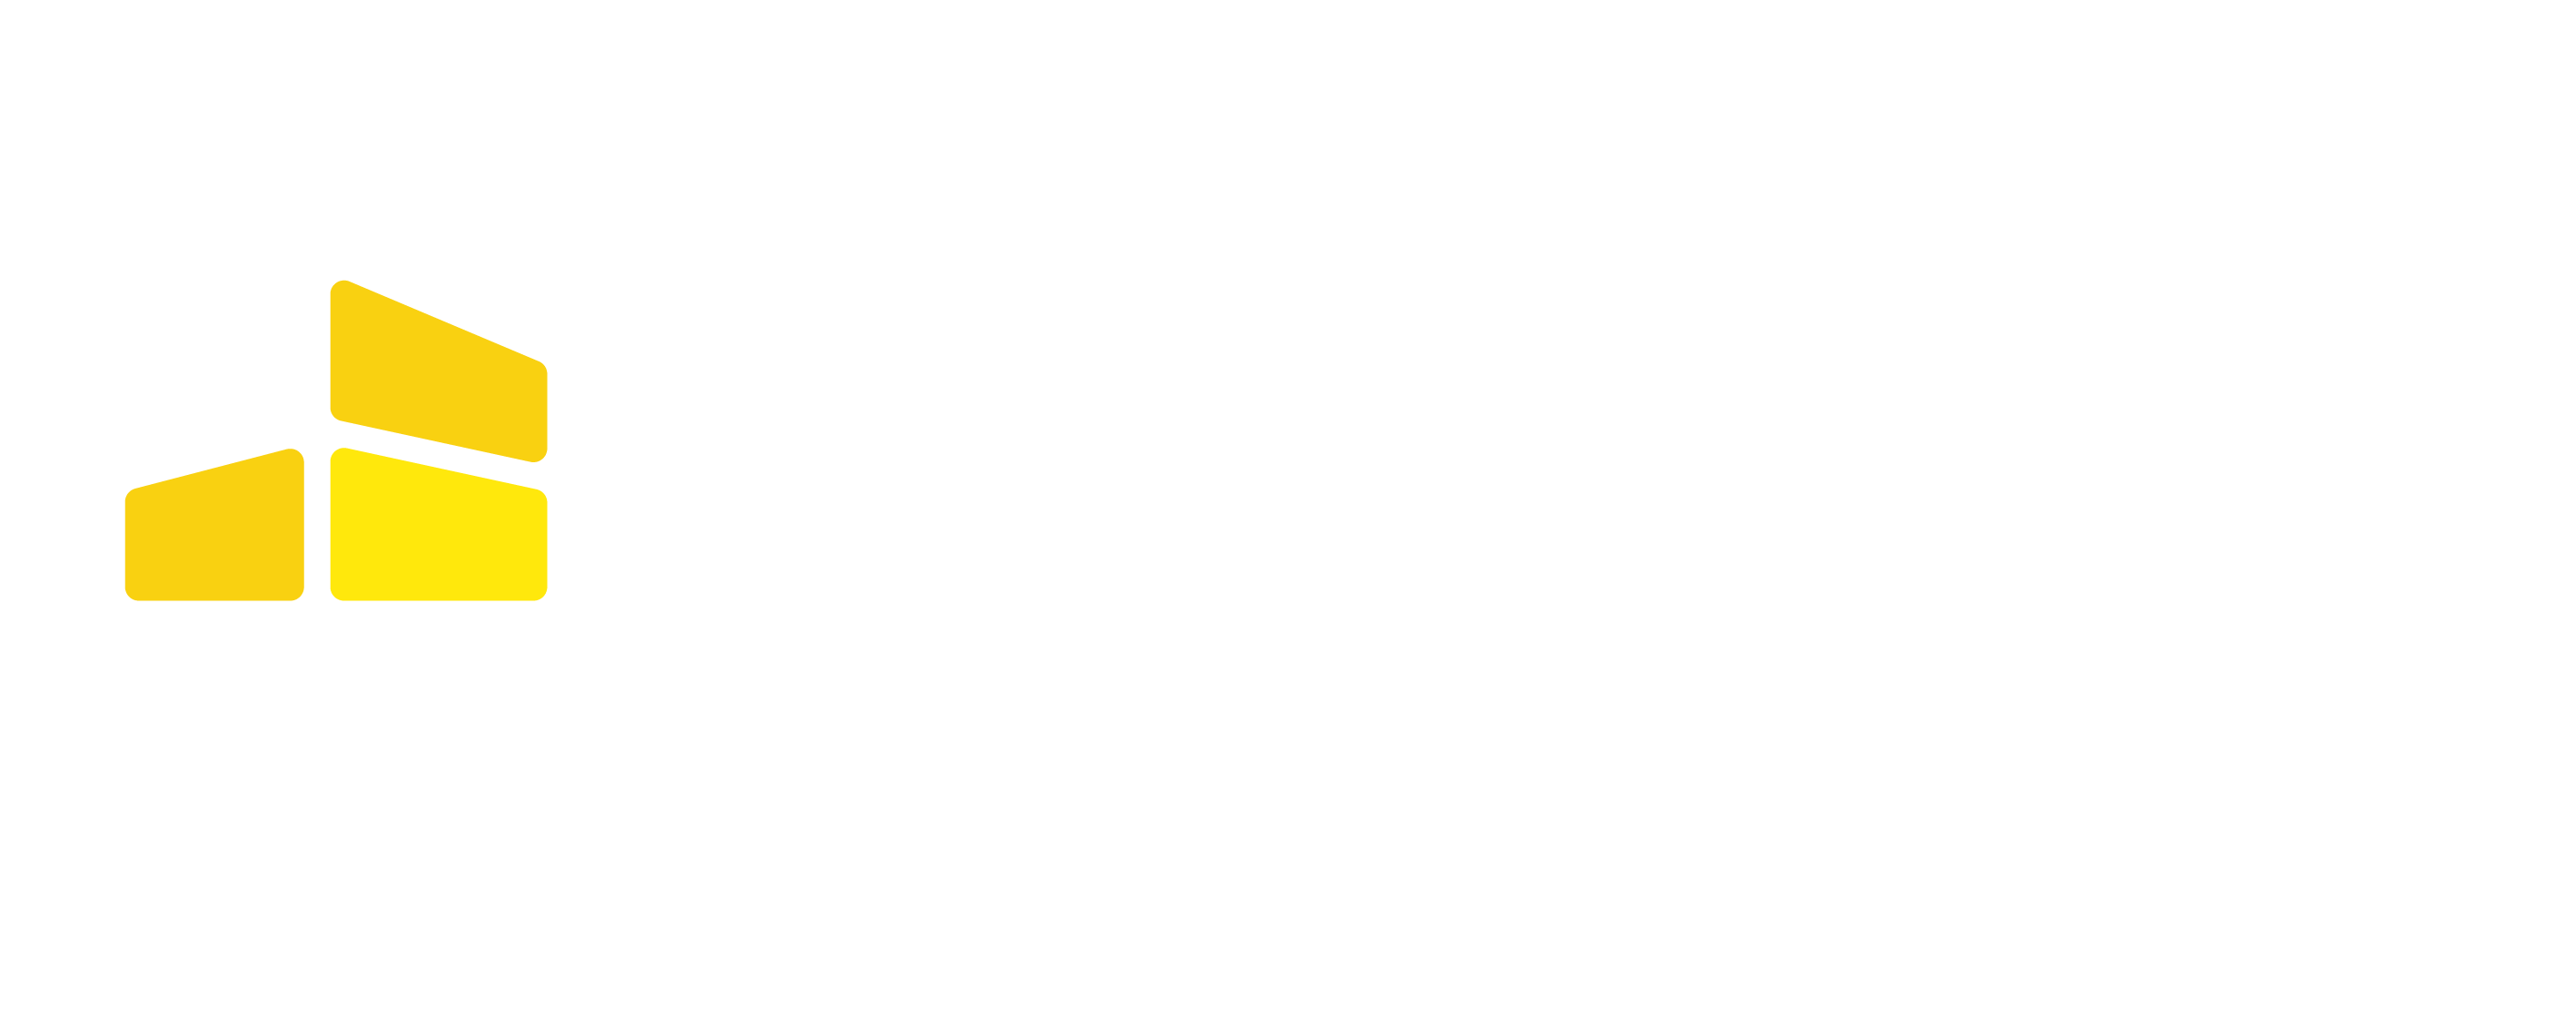 European Universities Estates Congress Logo